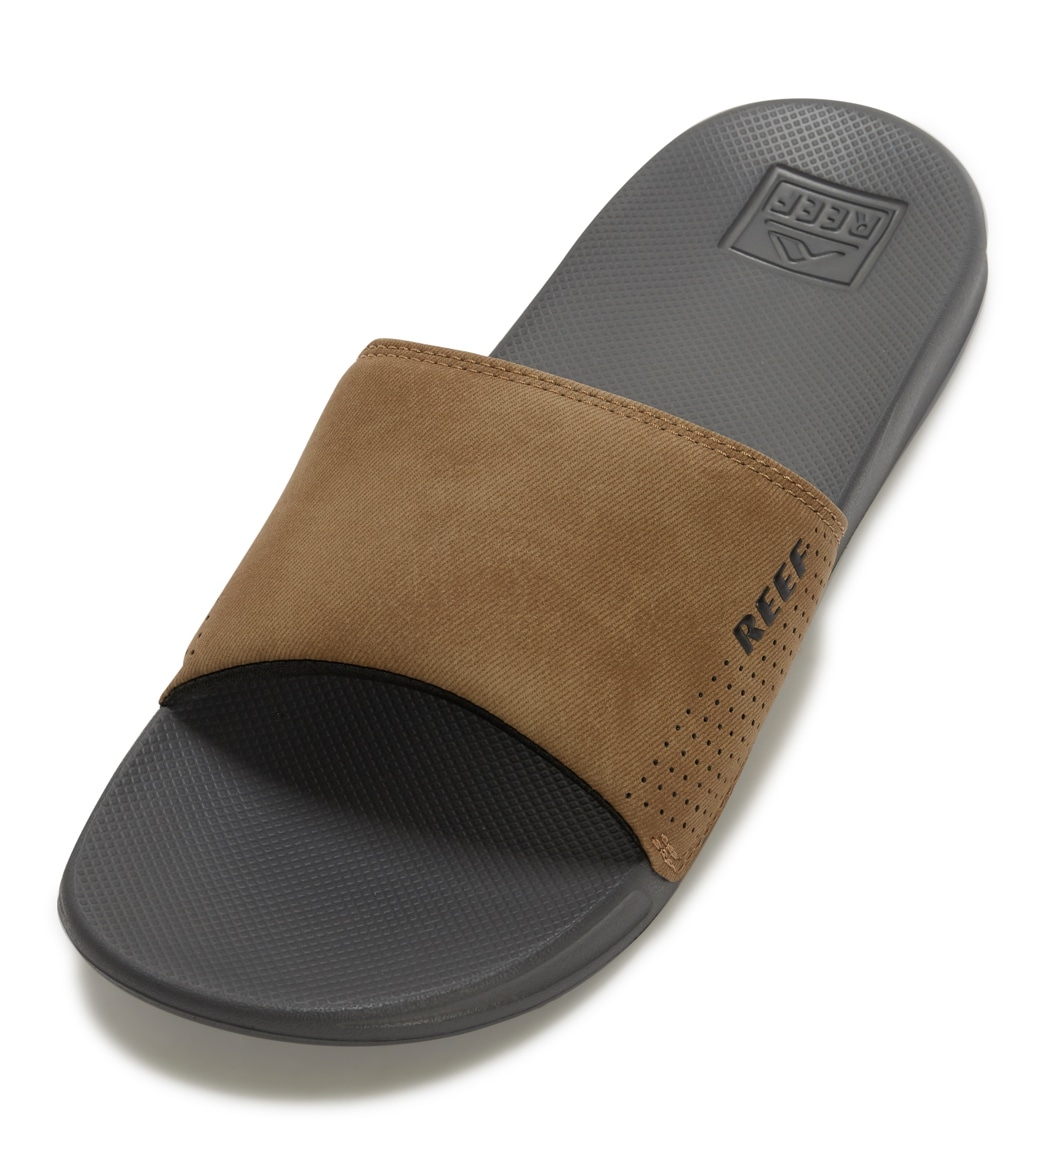 Reef One Slides Sandals - Grey/Tan 10 - Swimoutlet.com